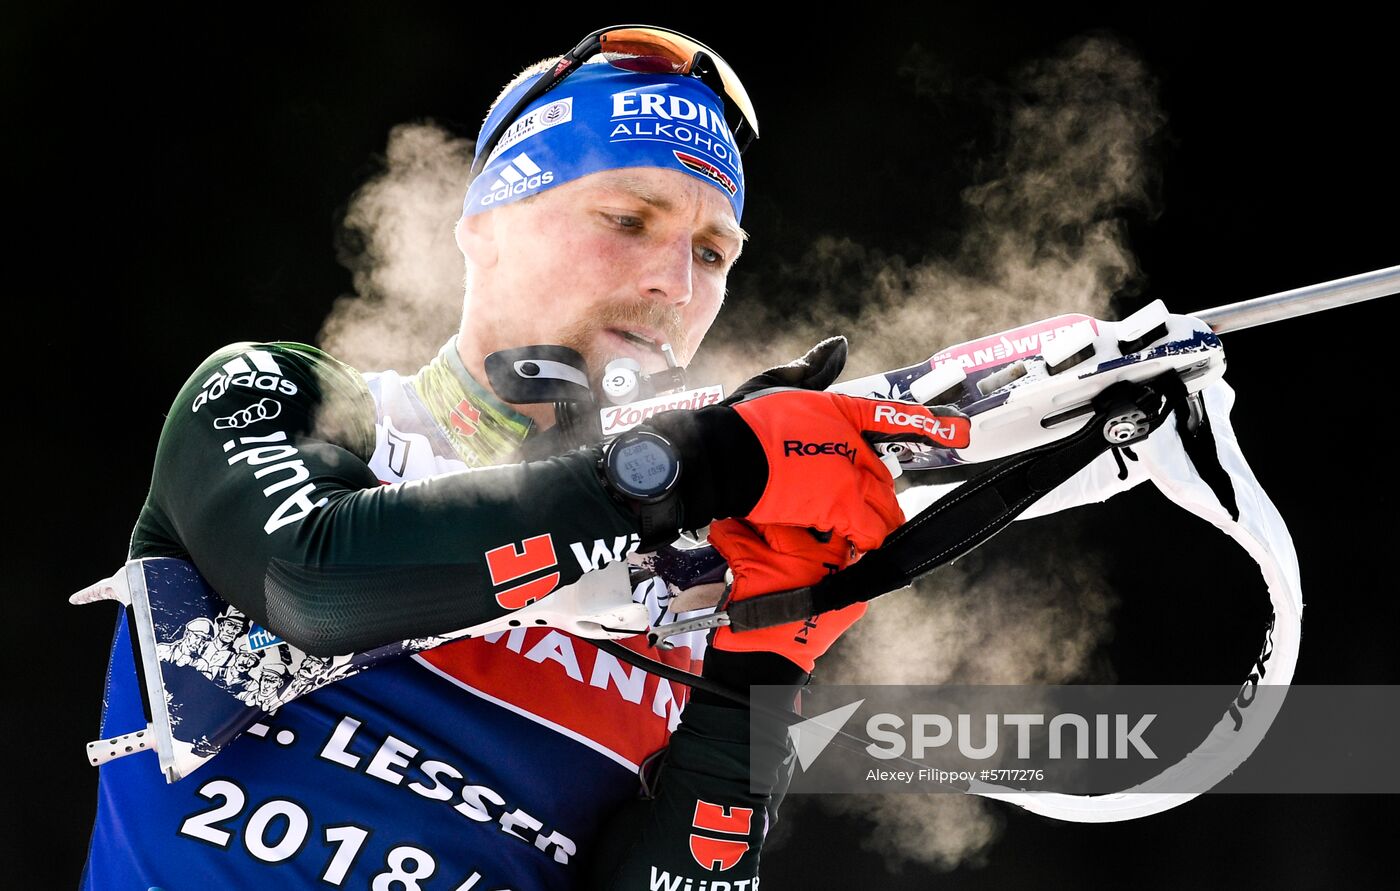 Slovenia Biathlon World Cup